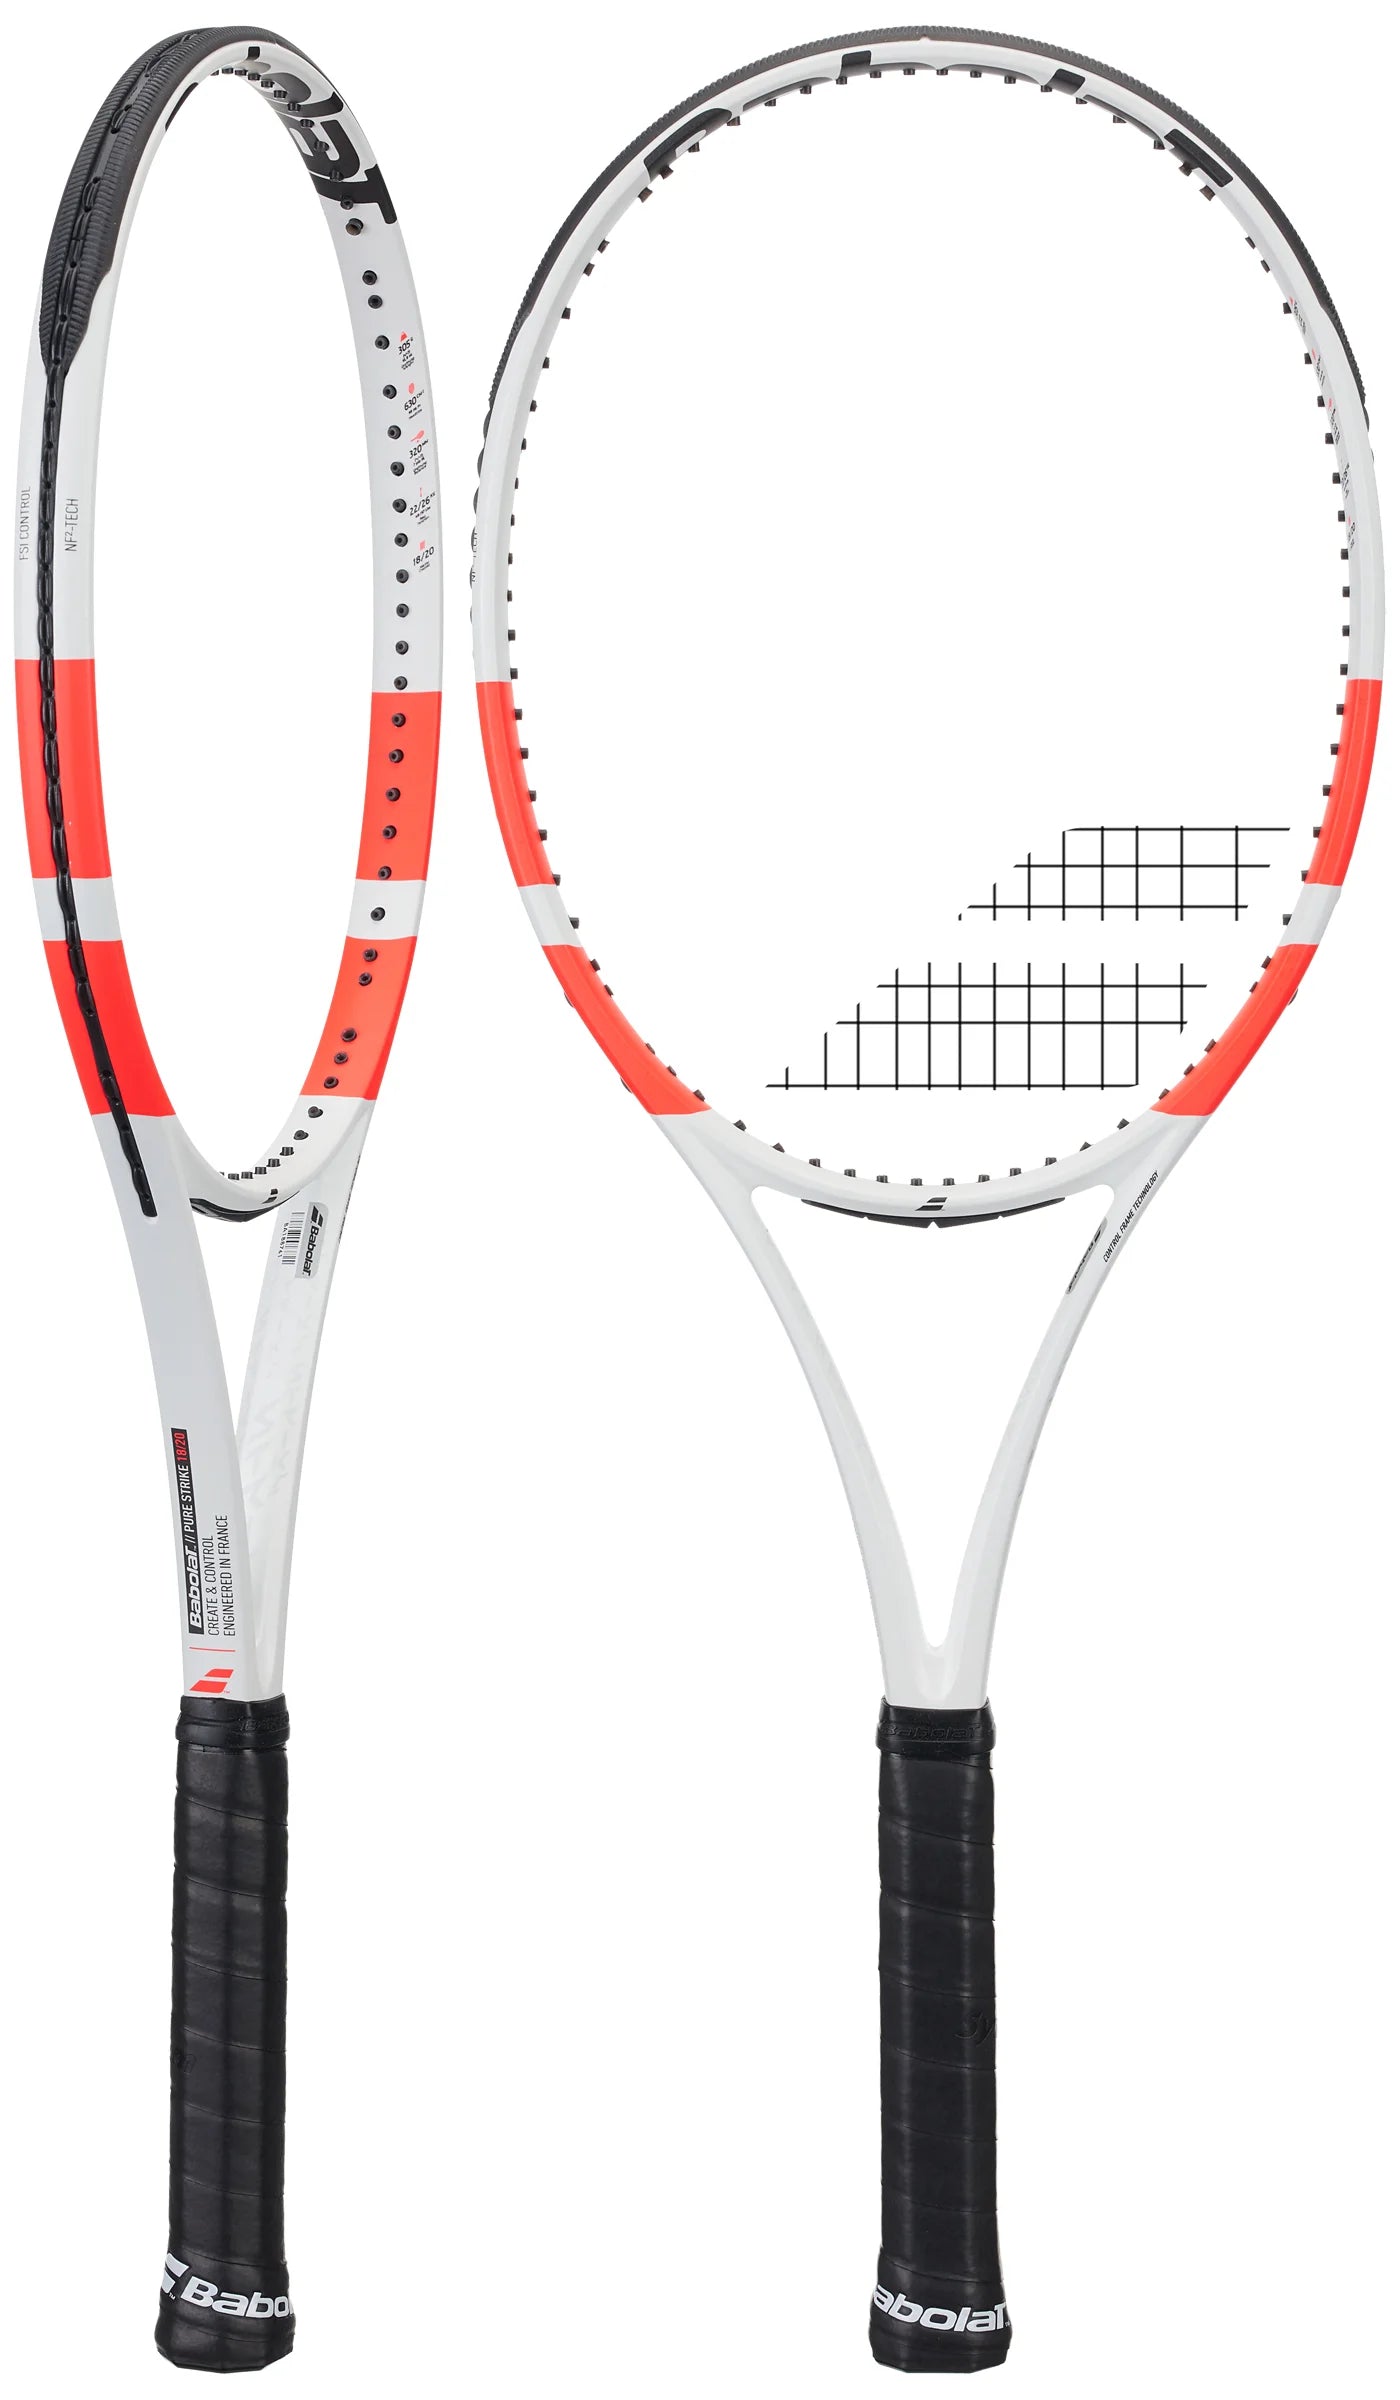 Antivibrateurs Babolat Tennis Flash Pure Drive x2 - Sports Raquettes